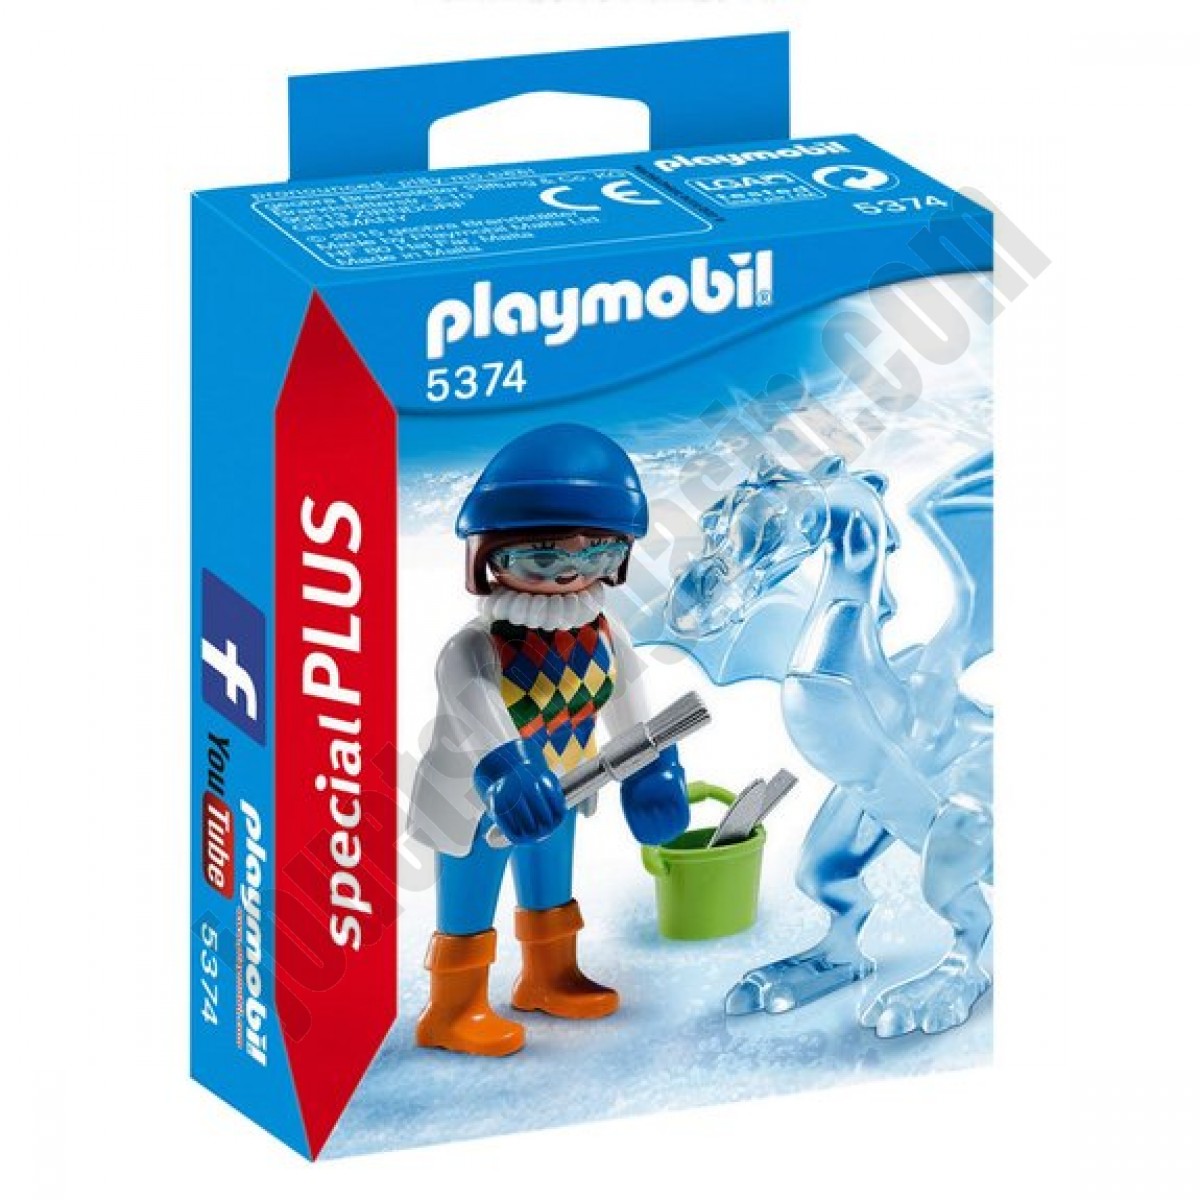 Artiste avec sculpture de glace Playmobil Spécial PLUS 5374 En promotion - Artiste avec sculpture de glace Playmobil Spécial PLUS 5374 En promotion